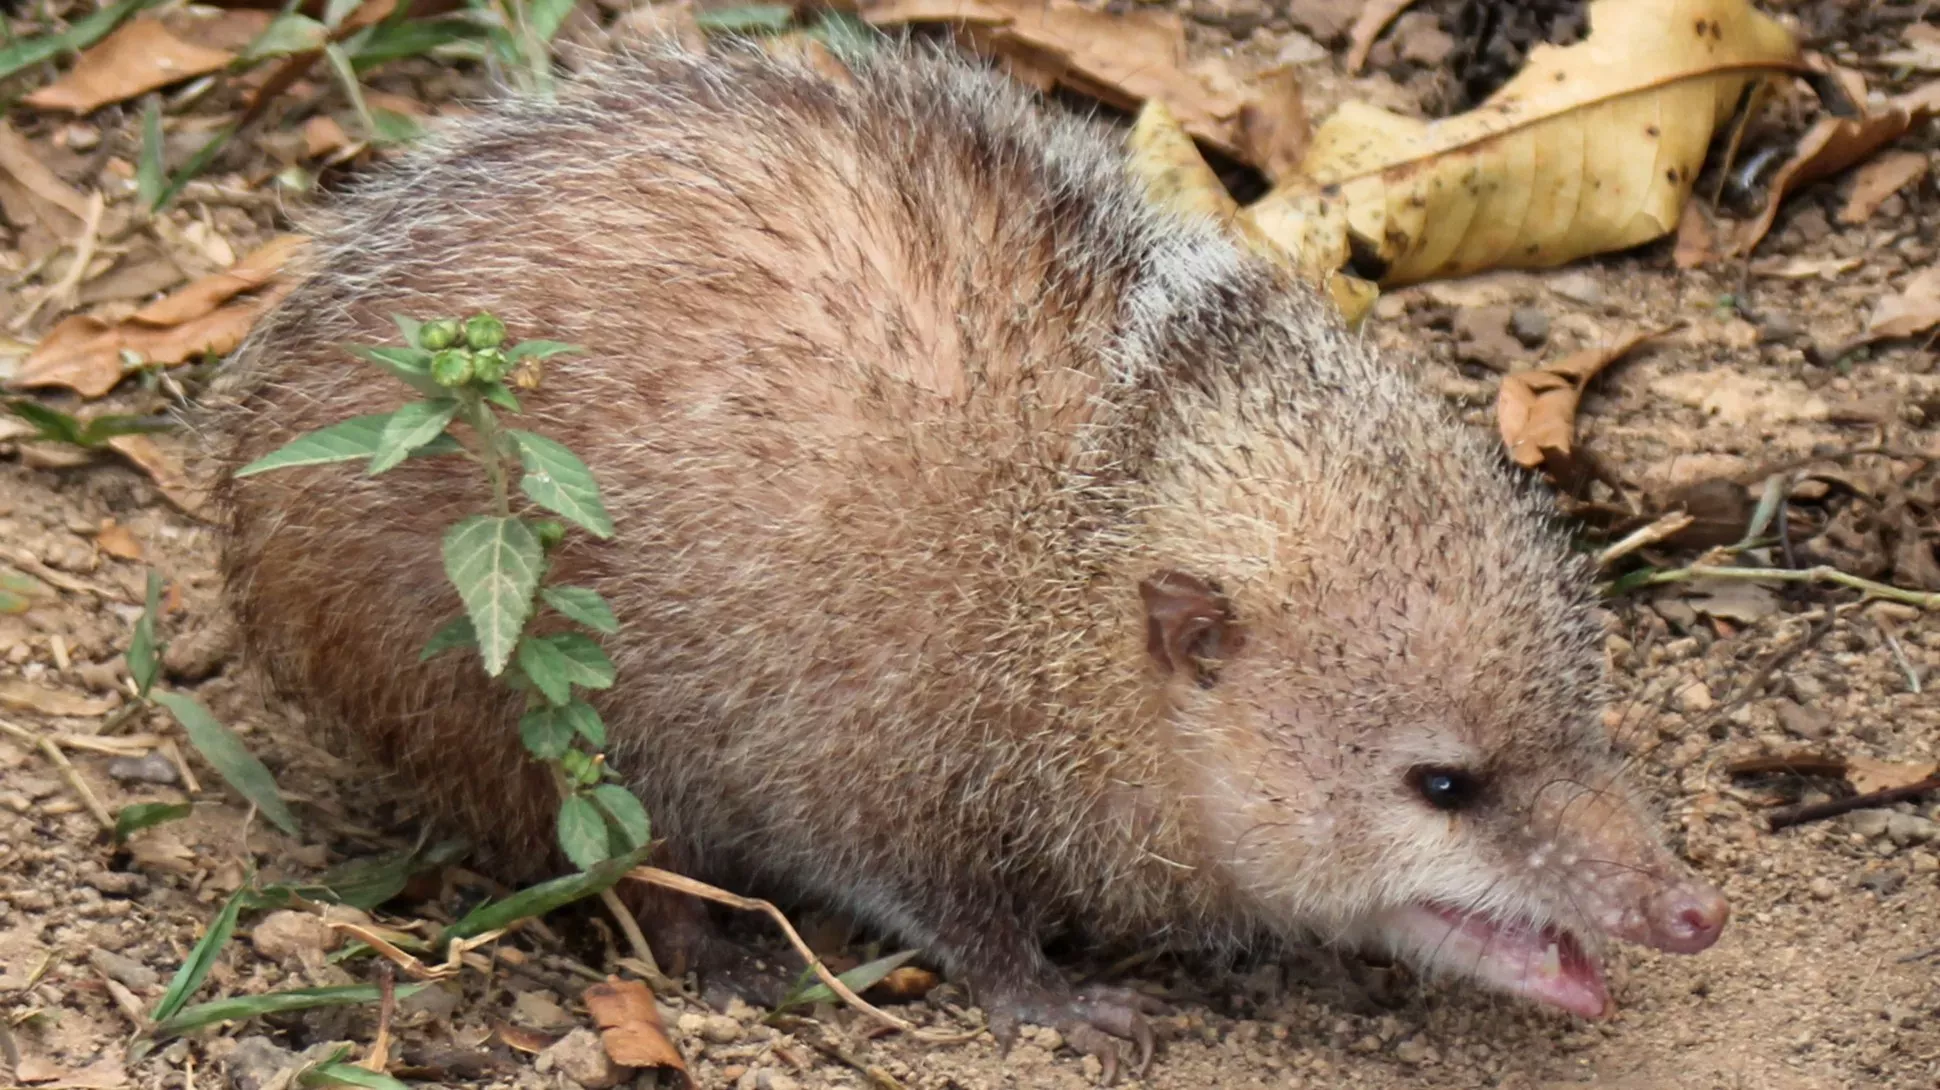 A small, hedgehog like creature called a tenrec